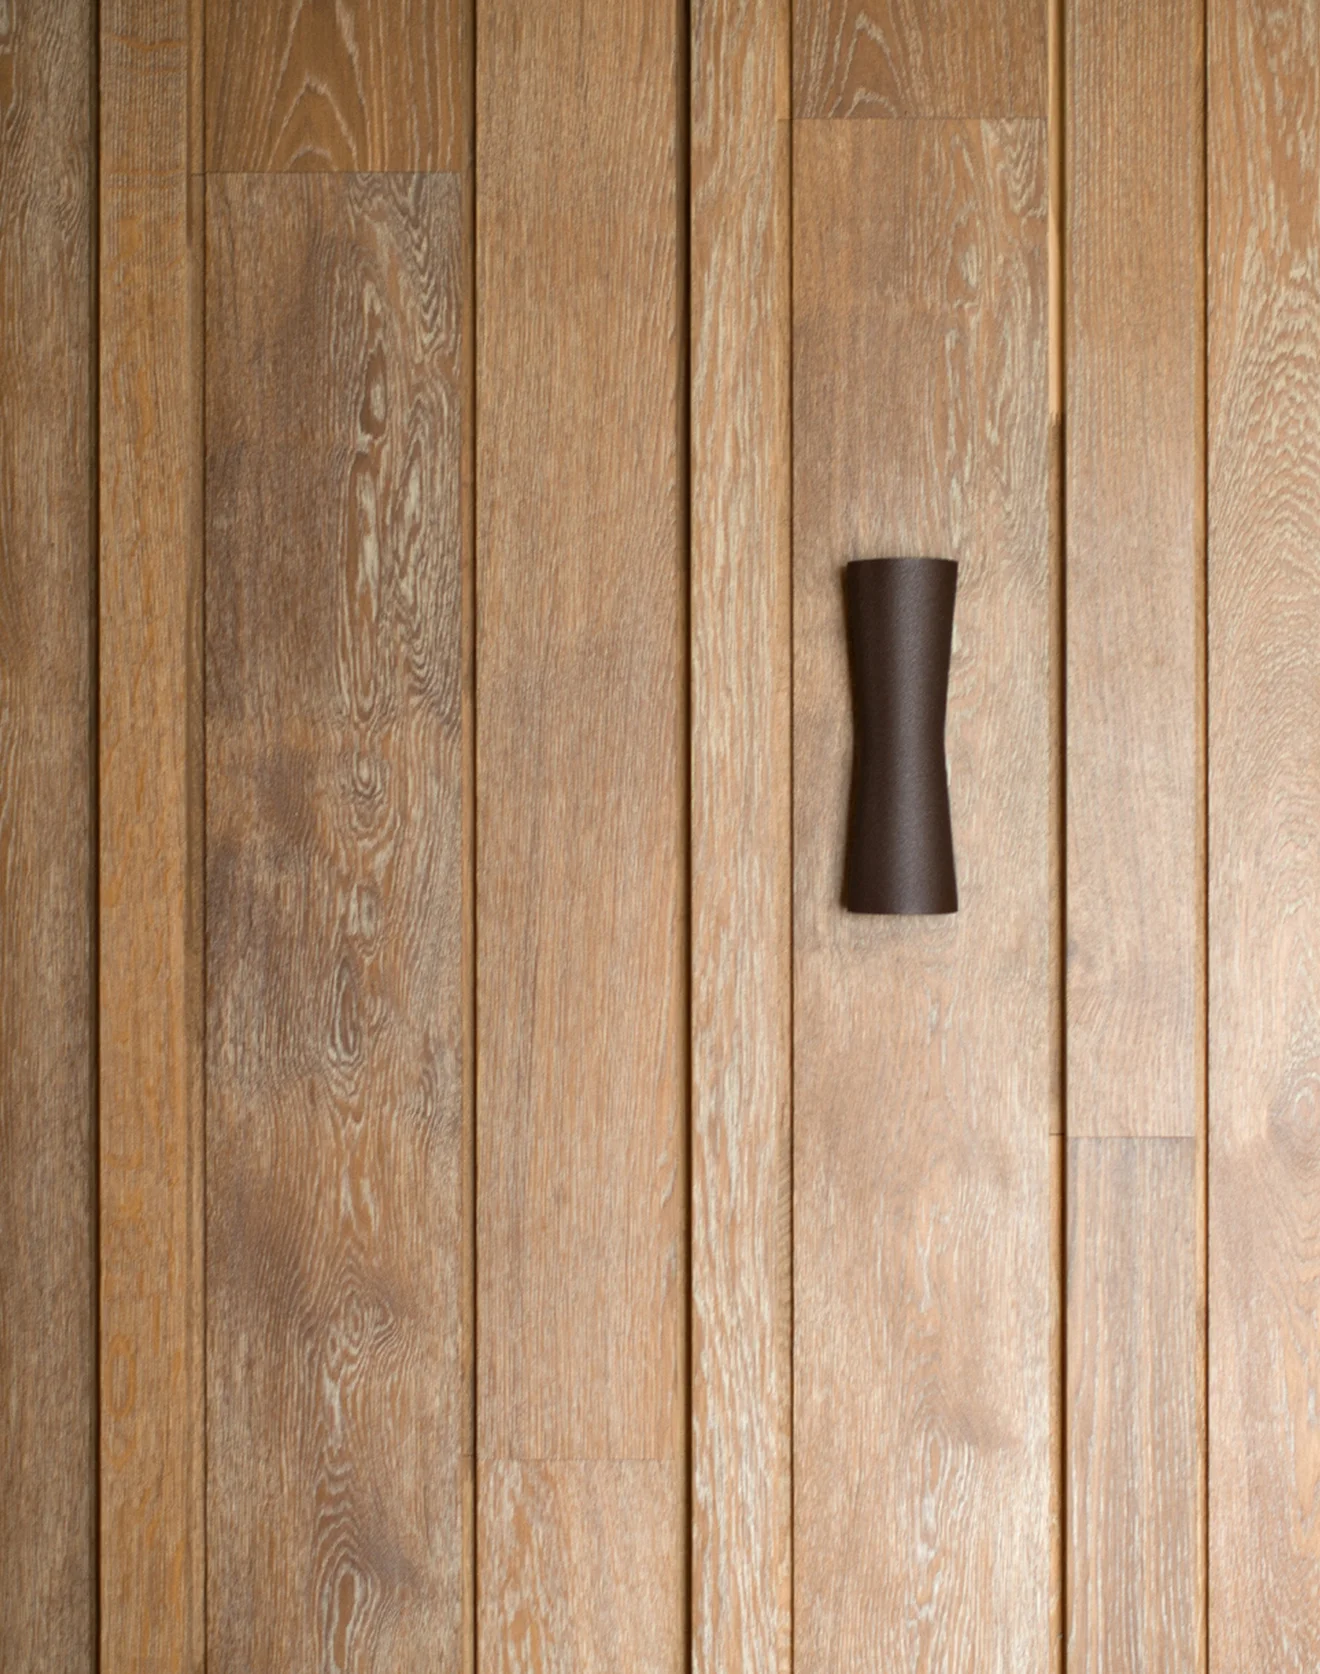 Solid Oak Wall Panels